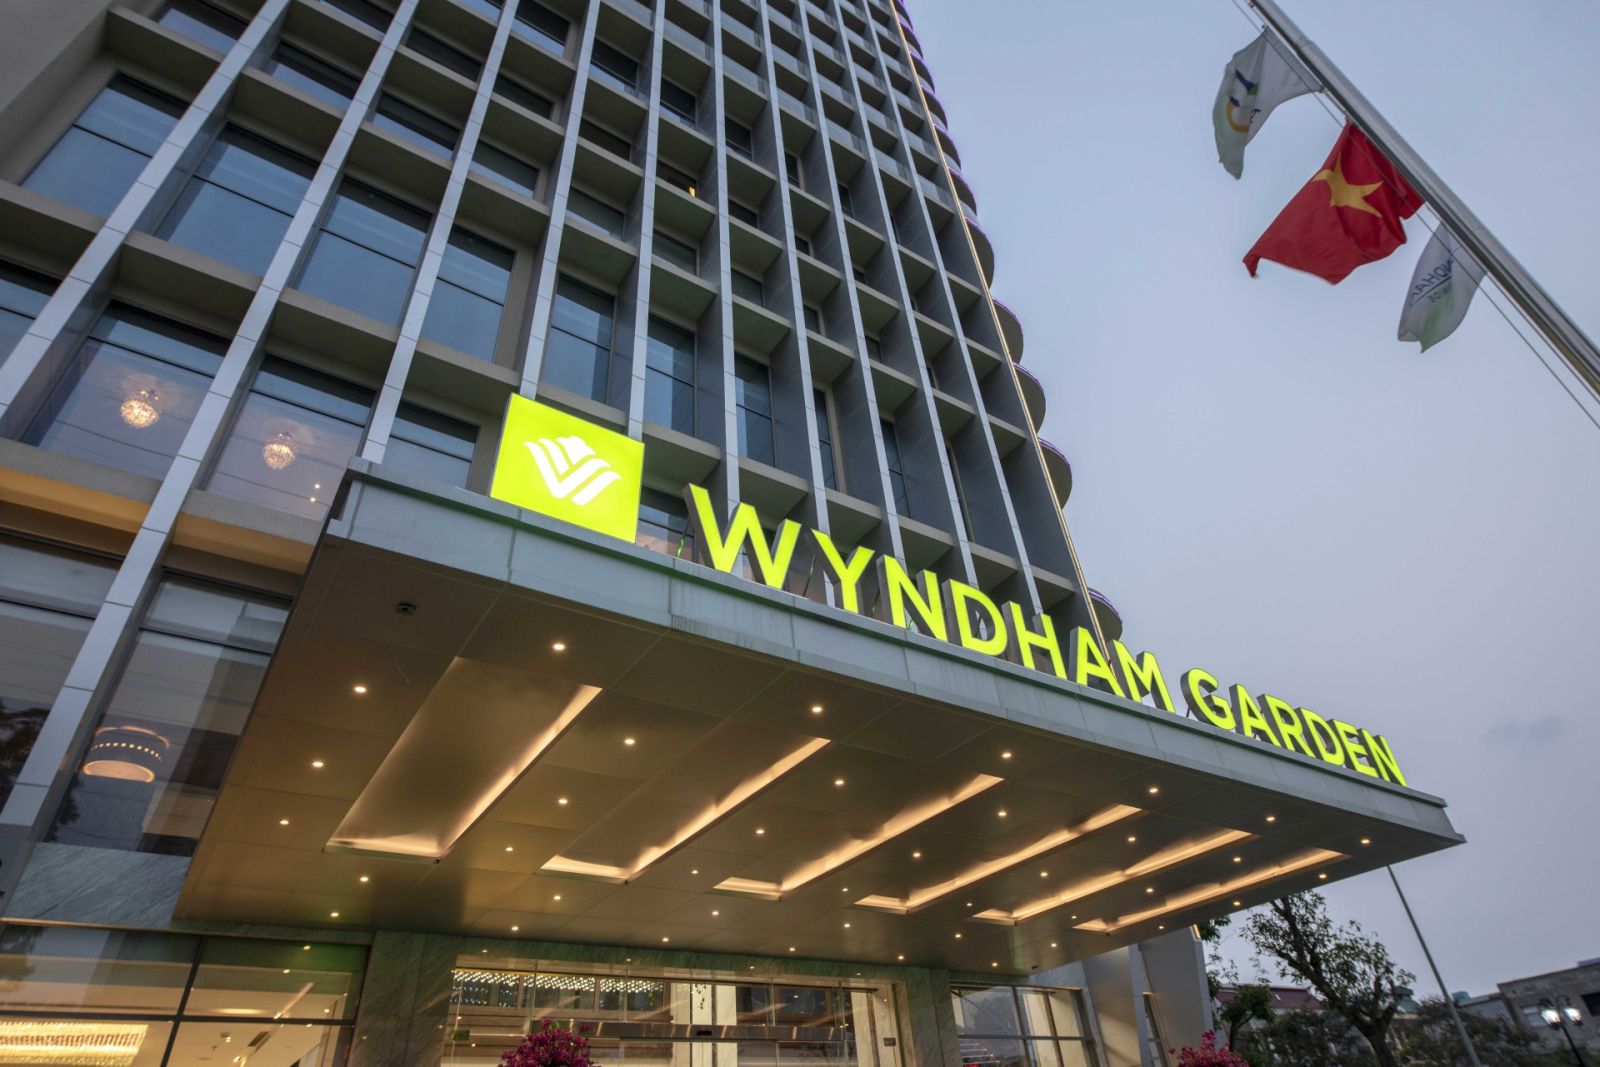 Wyndham Garden Hanoi is the first international 5-star hotel in Ha Dong district.